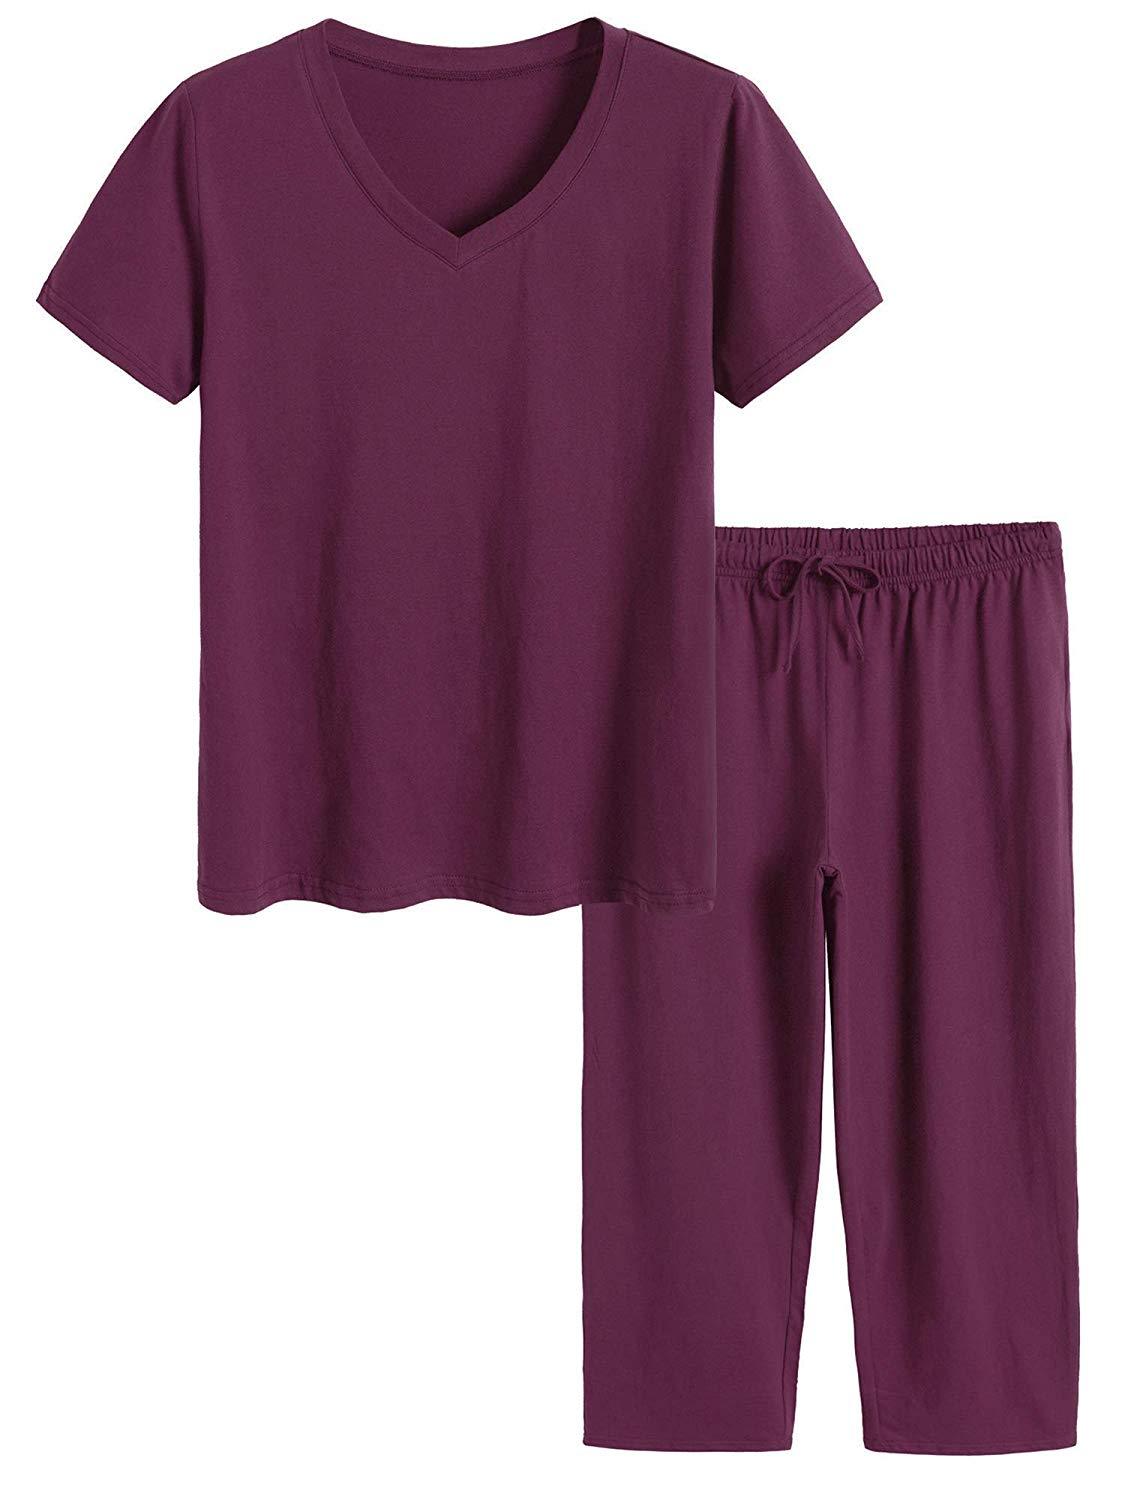 Women's Cotton Pajamas Set Tops and Capri Pants Sleepwear - Latuza